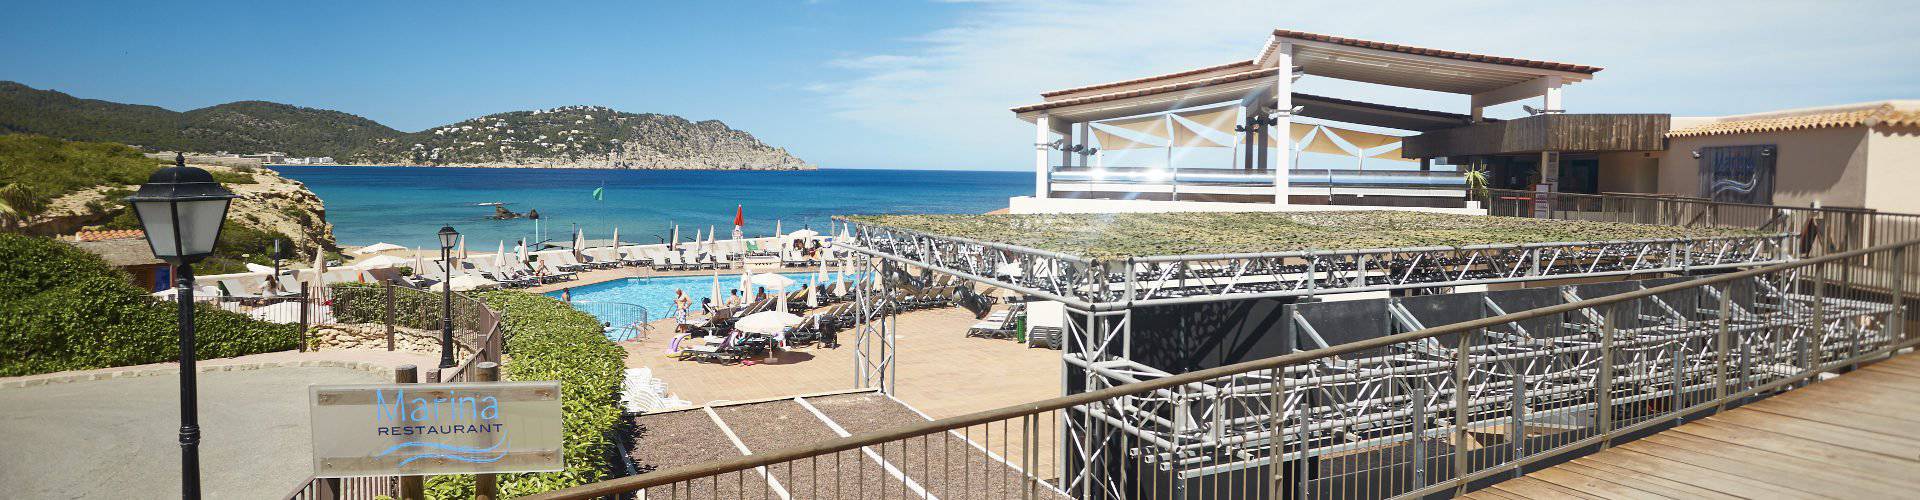 Servizi Invisa Hotel Club Cala Blanca Playa Es Figueral